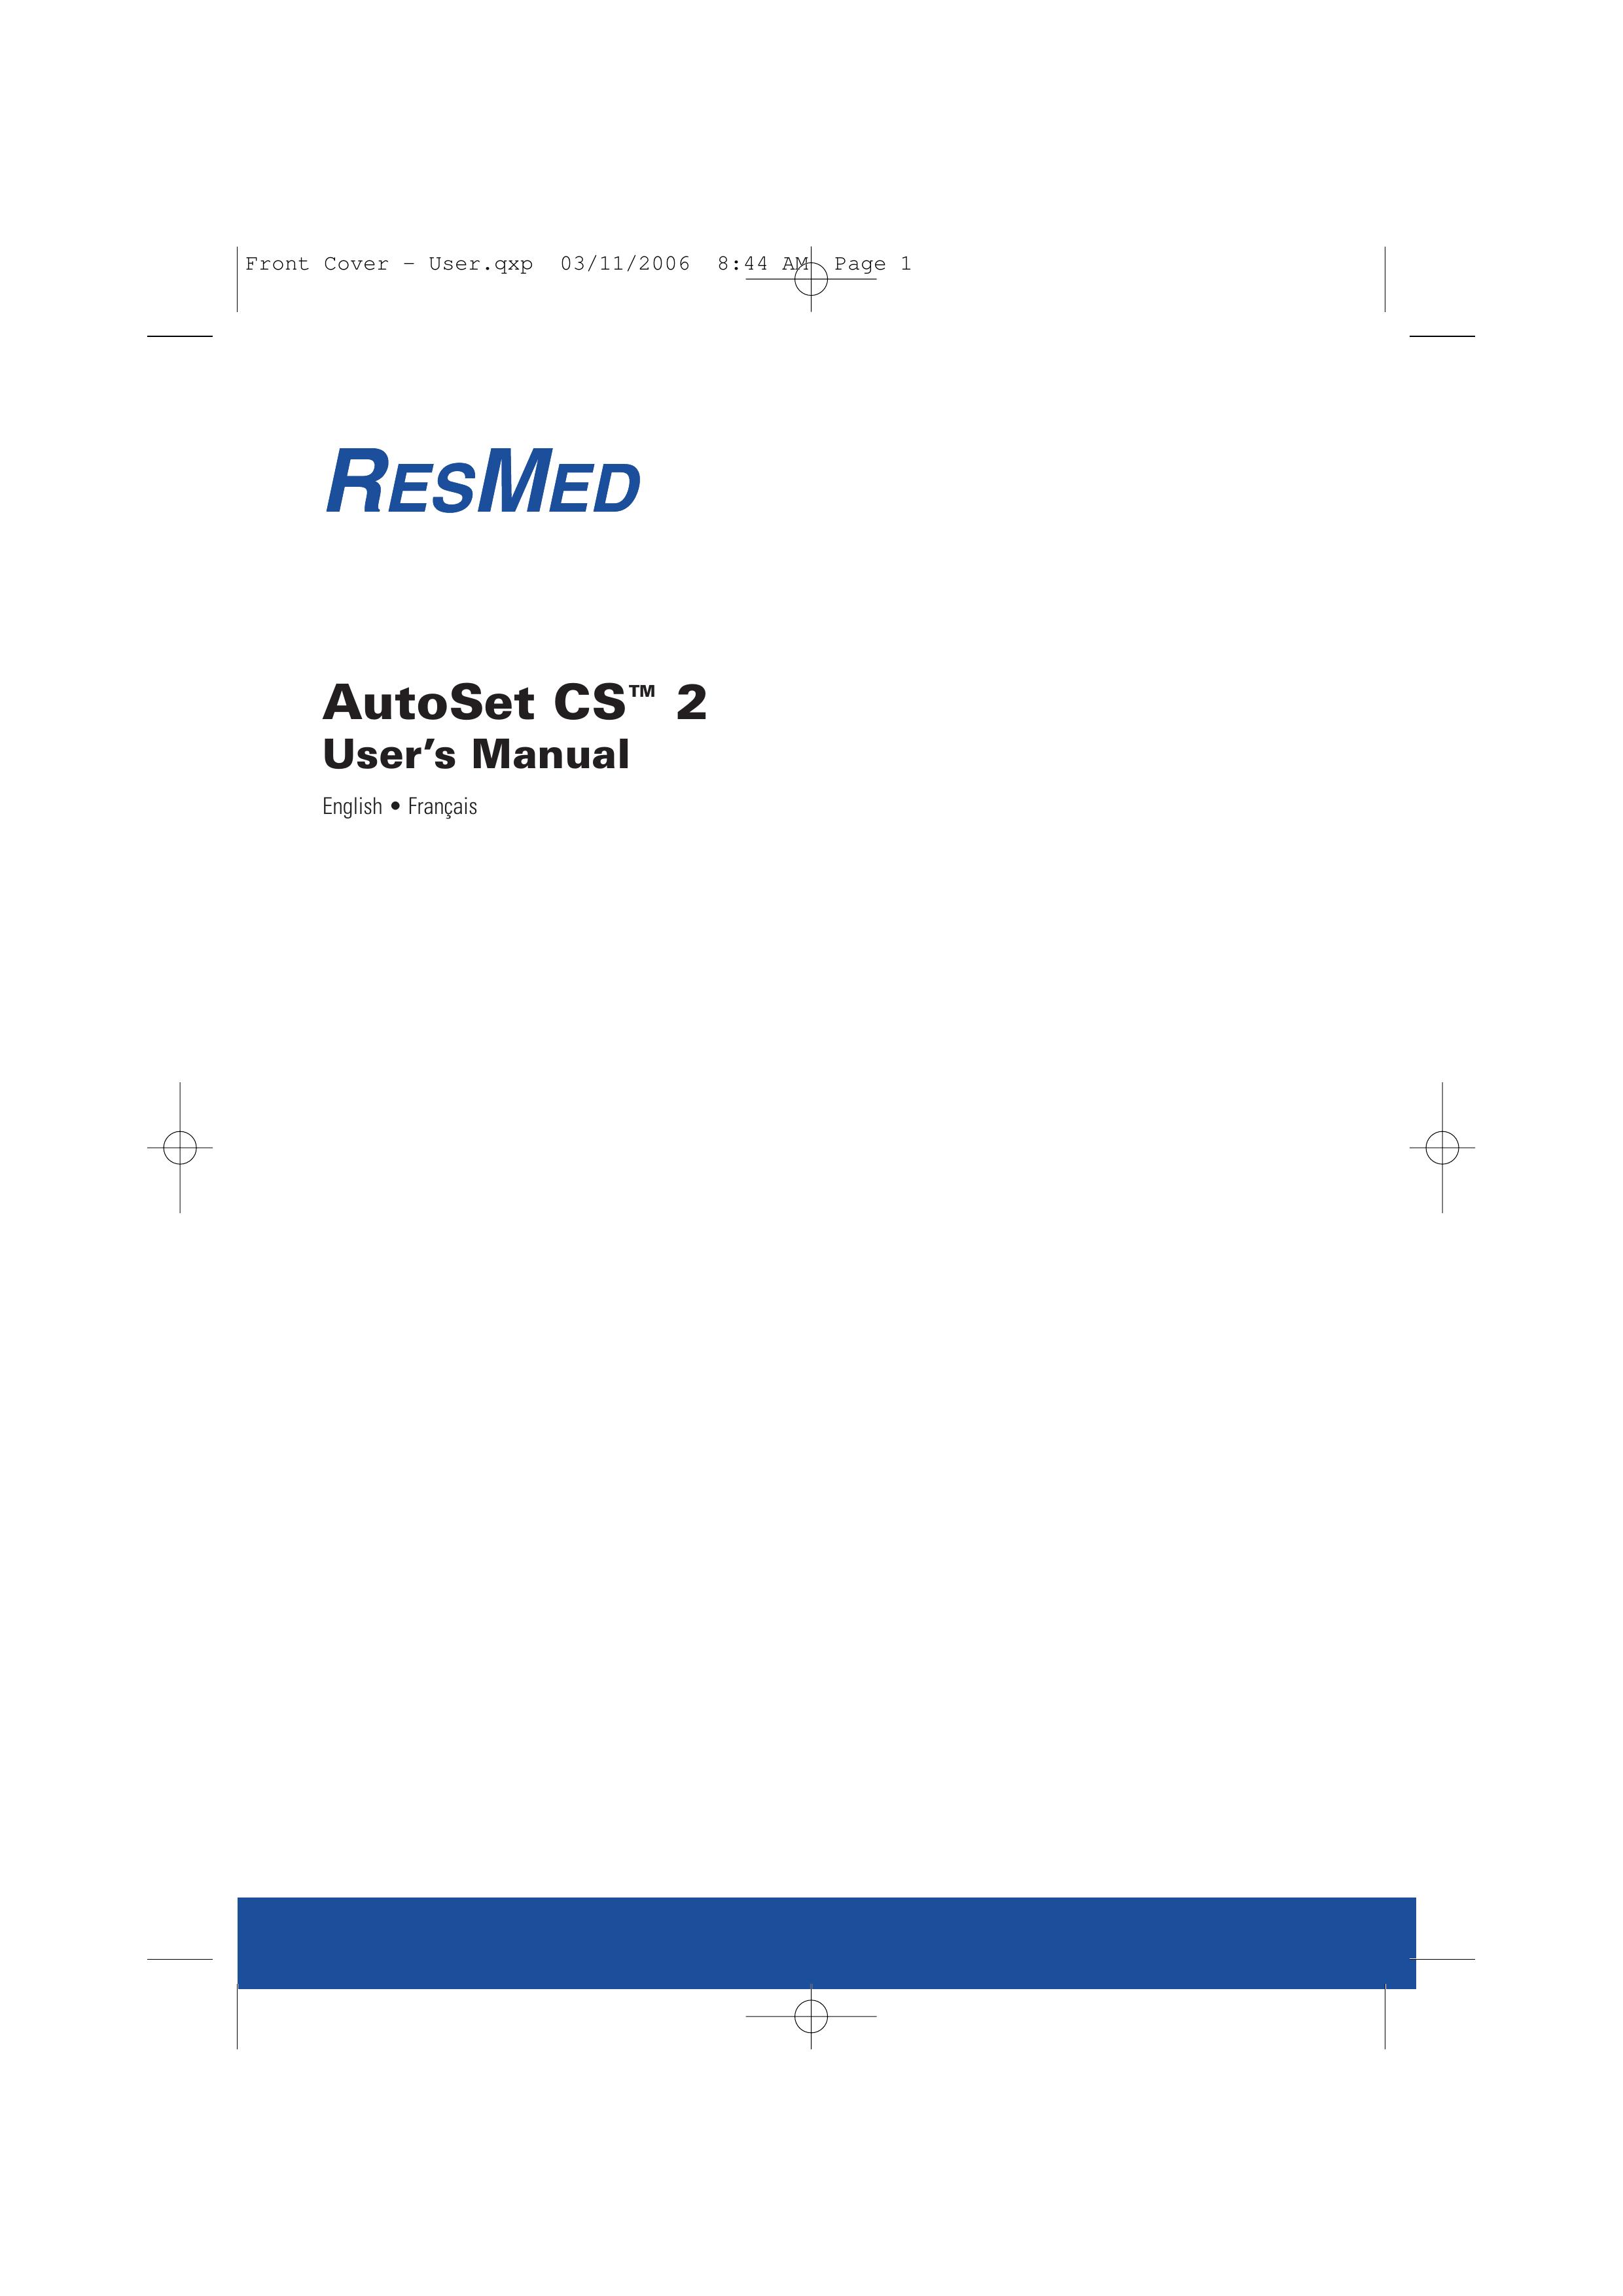 ResMed AutoSet CS 2 Portable Generator User Manual